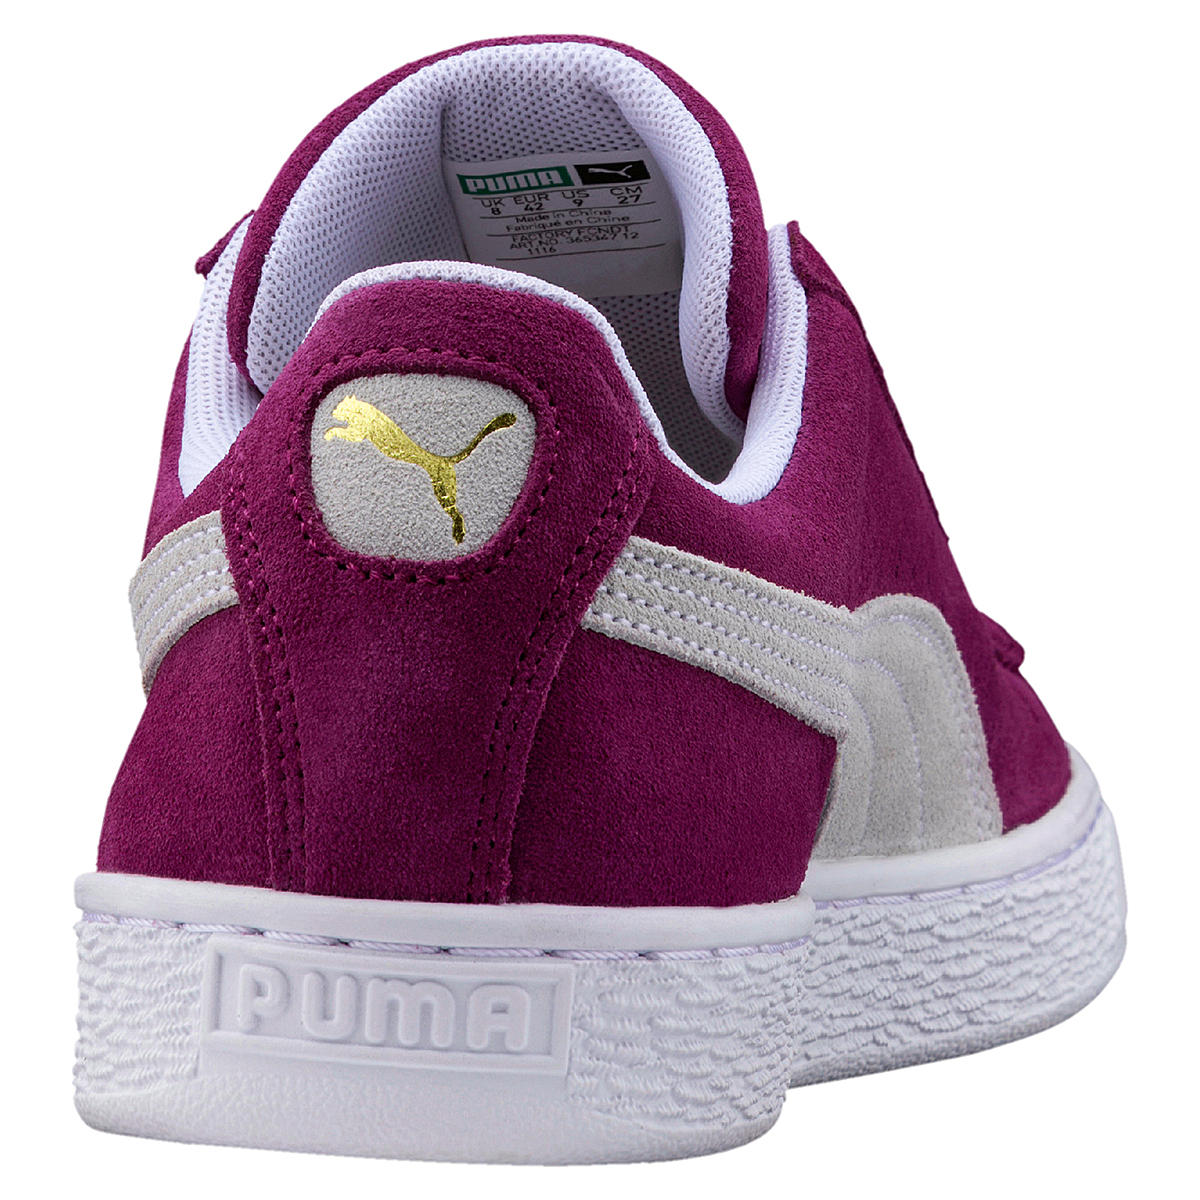 Puma Suede Classic Unisex Sneaker Low-Top violett 365347 12